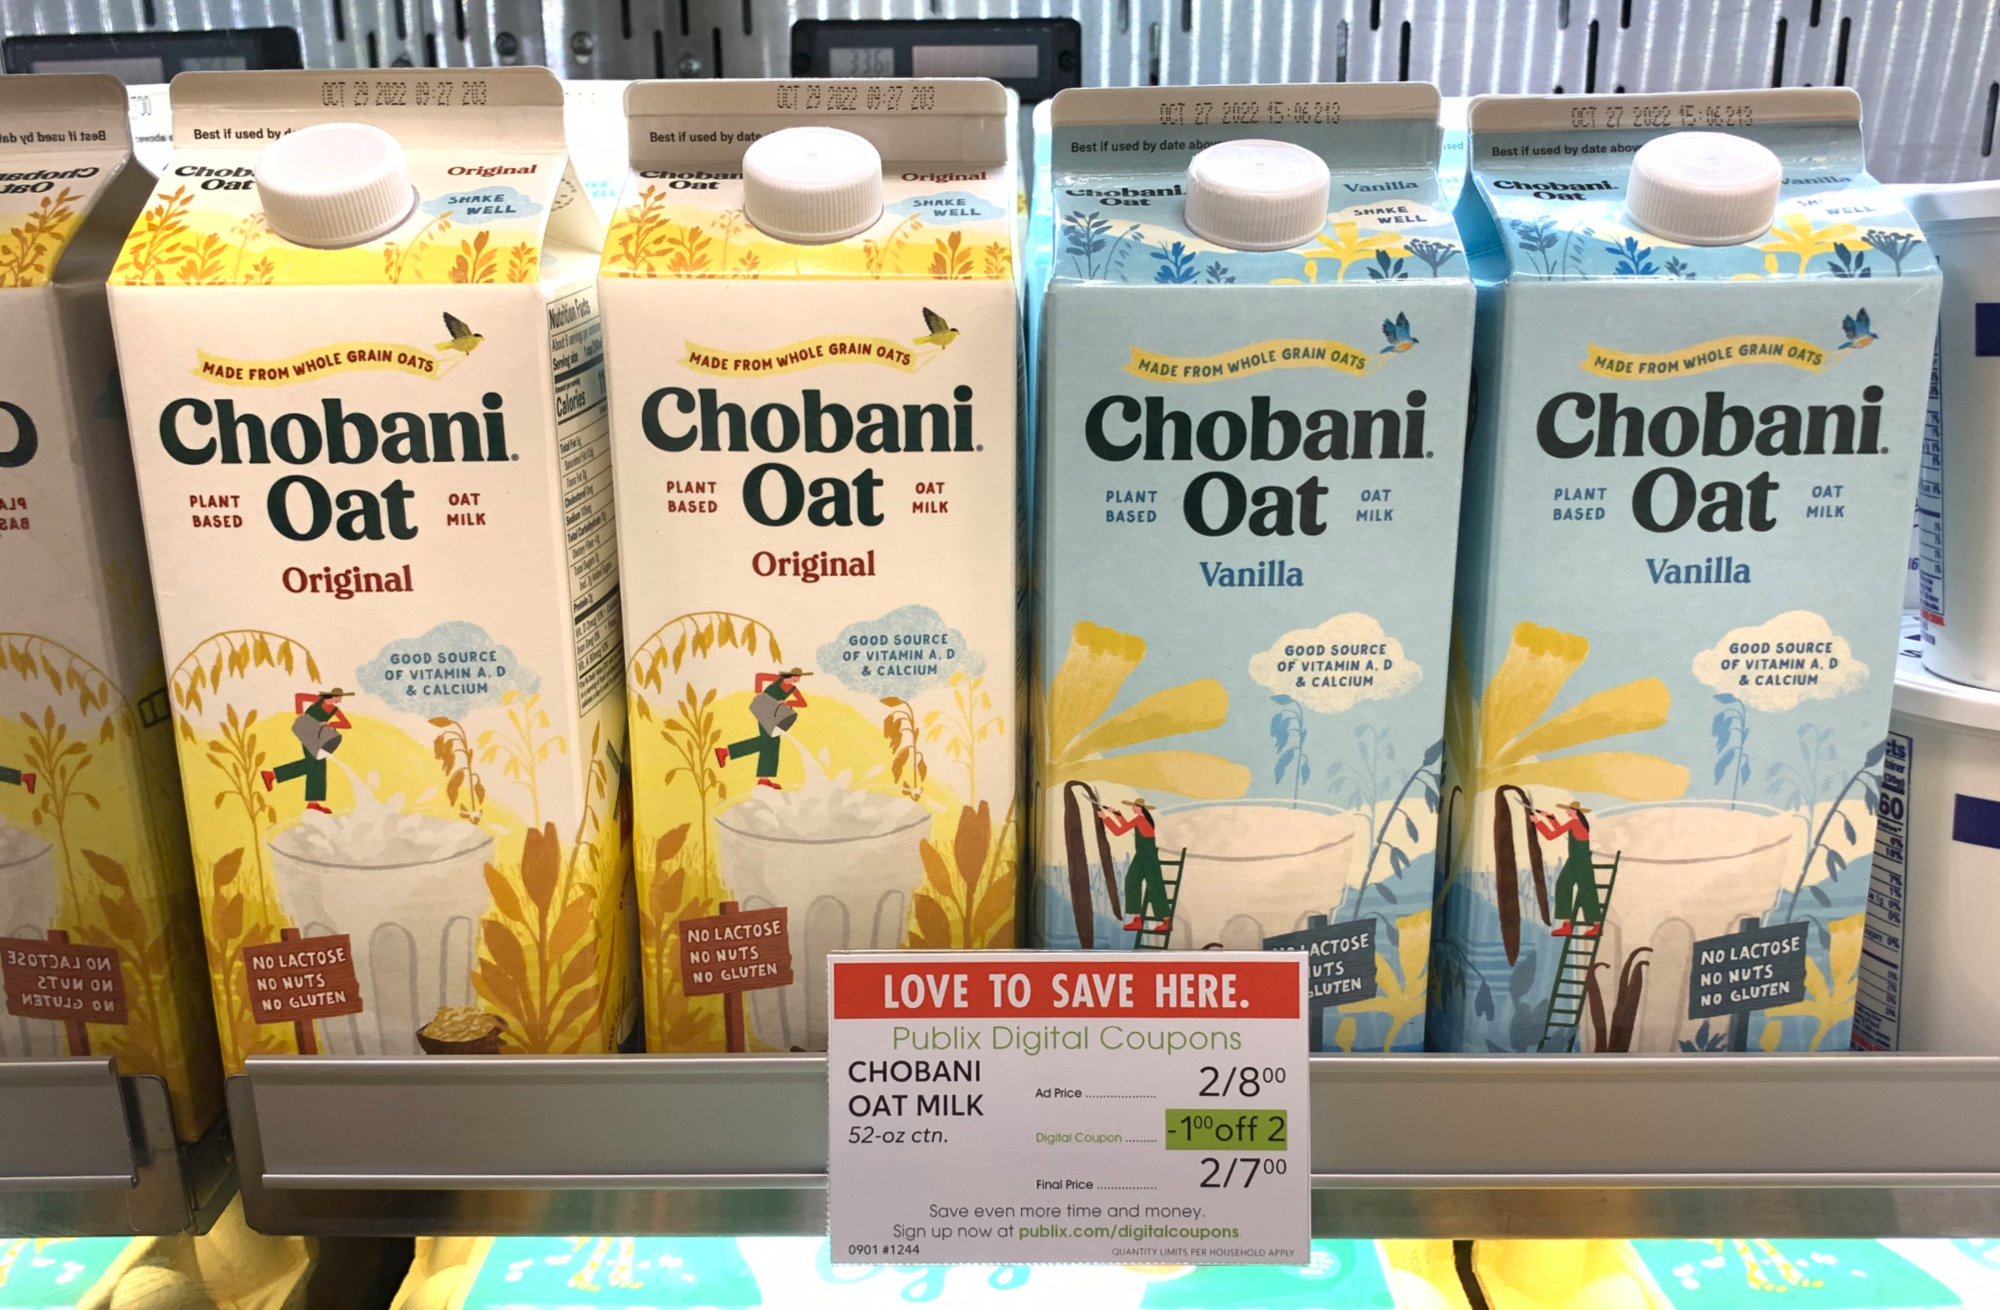 Chobani Oat Milk Just 1.75 At Publix iHeartPublix